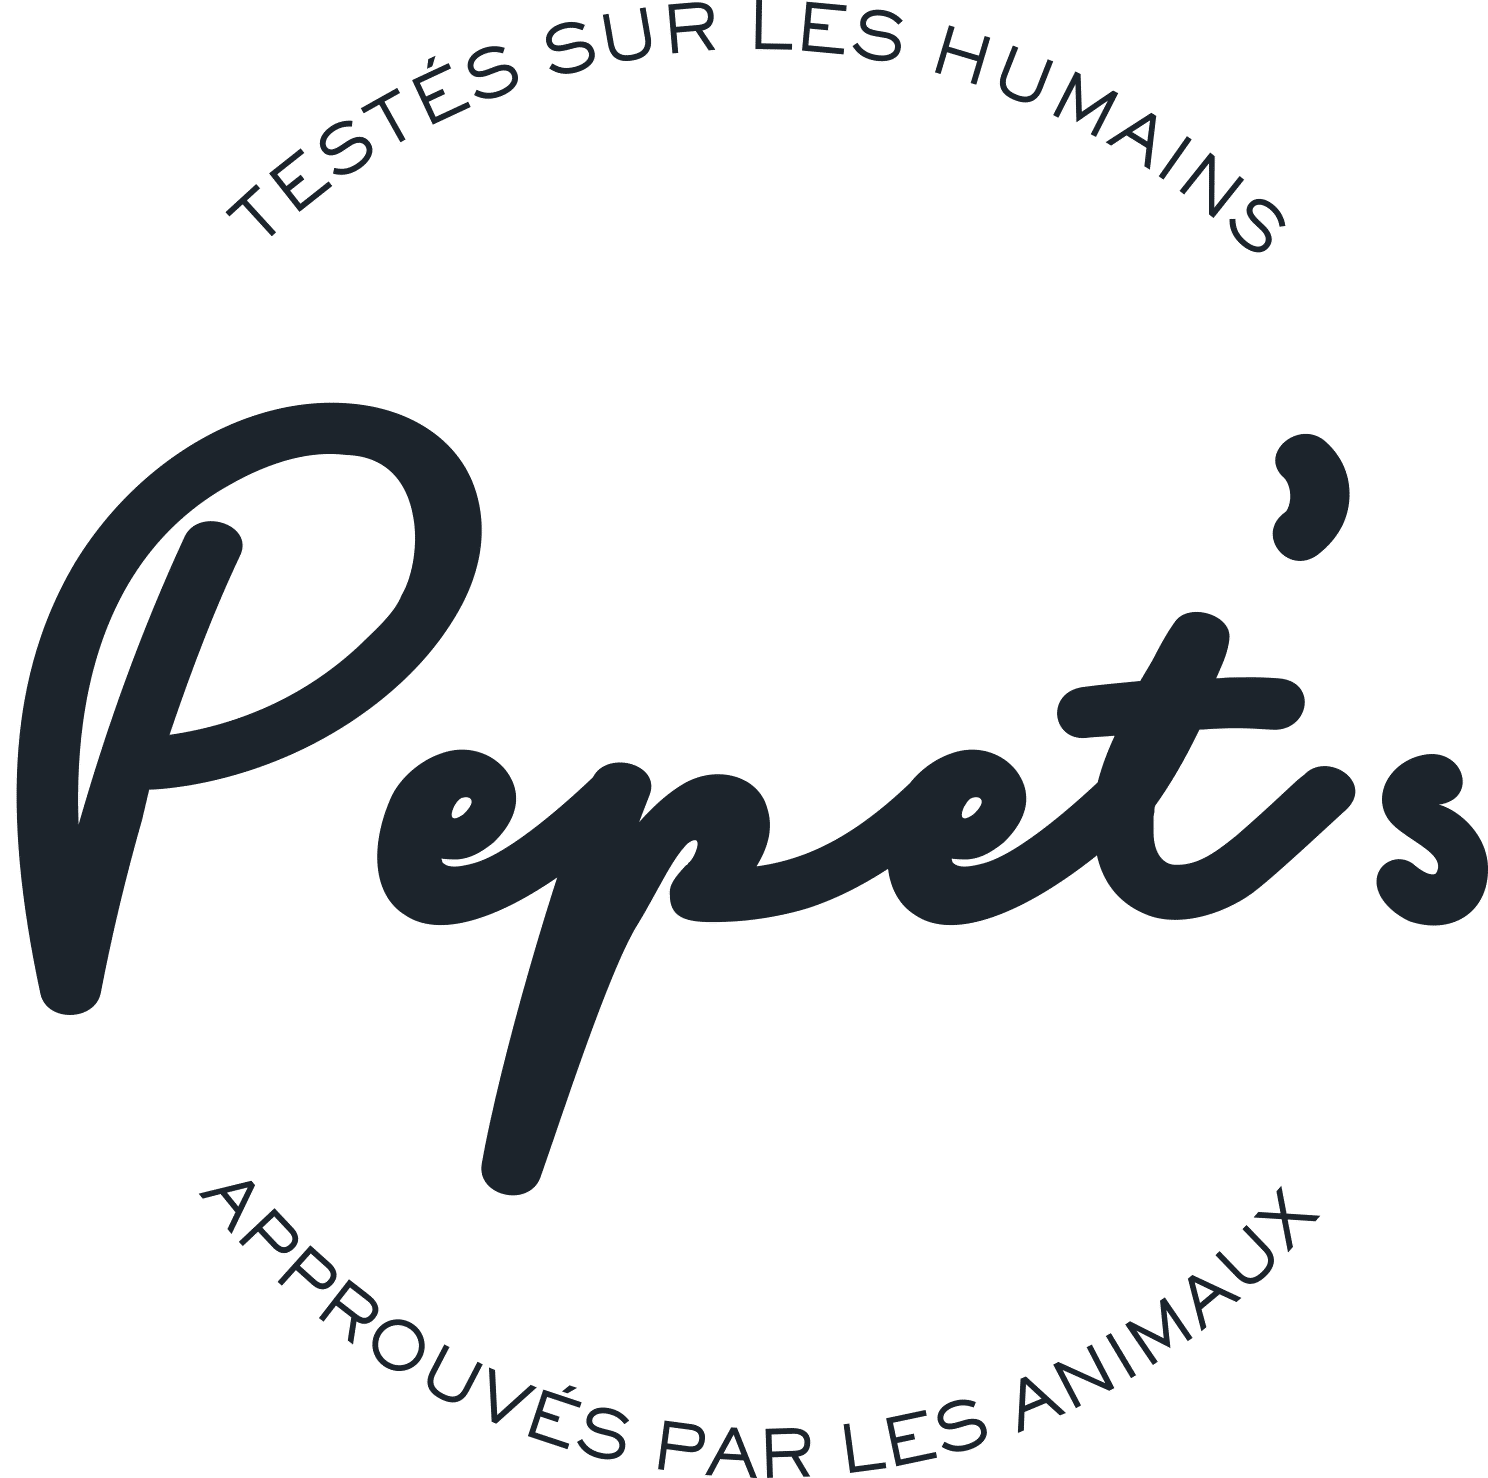 Pepet's